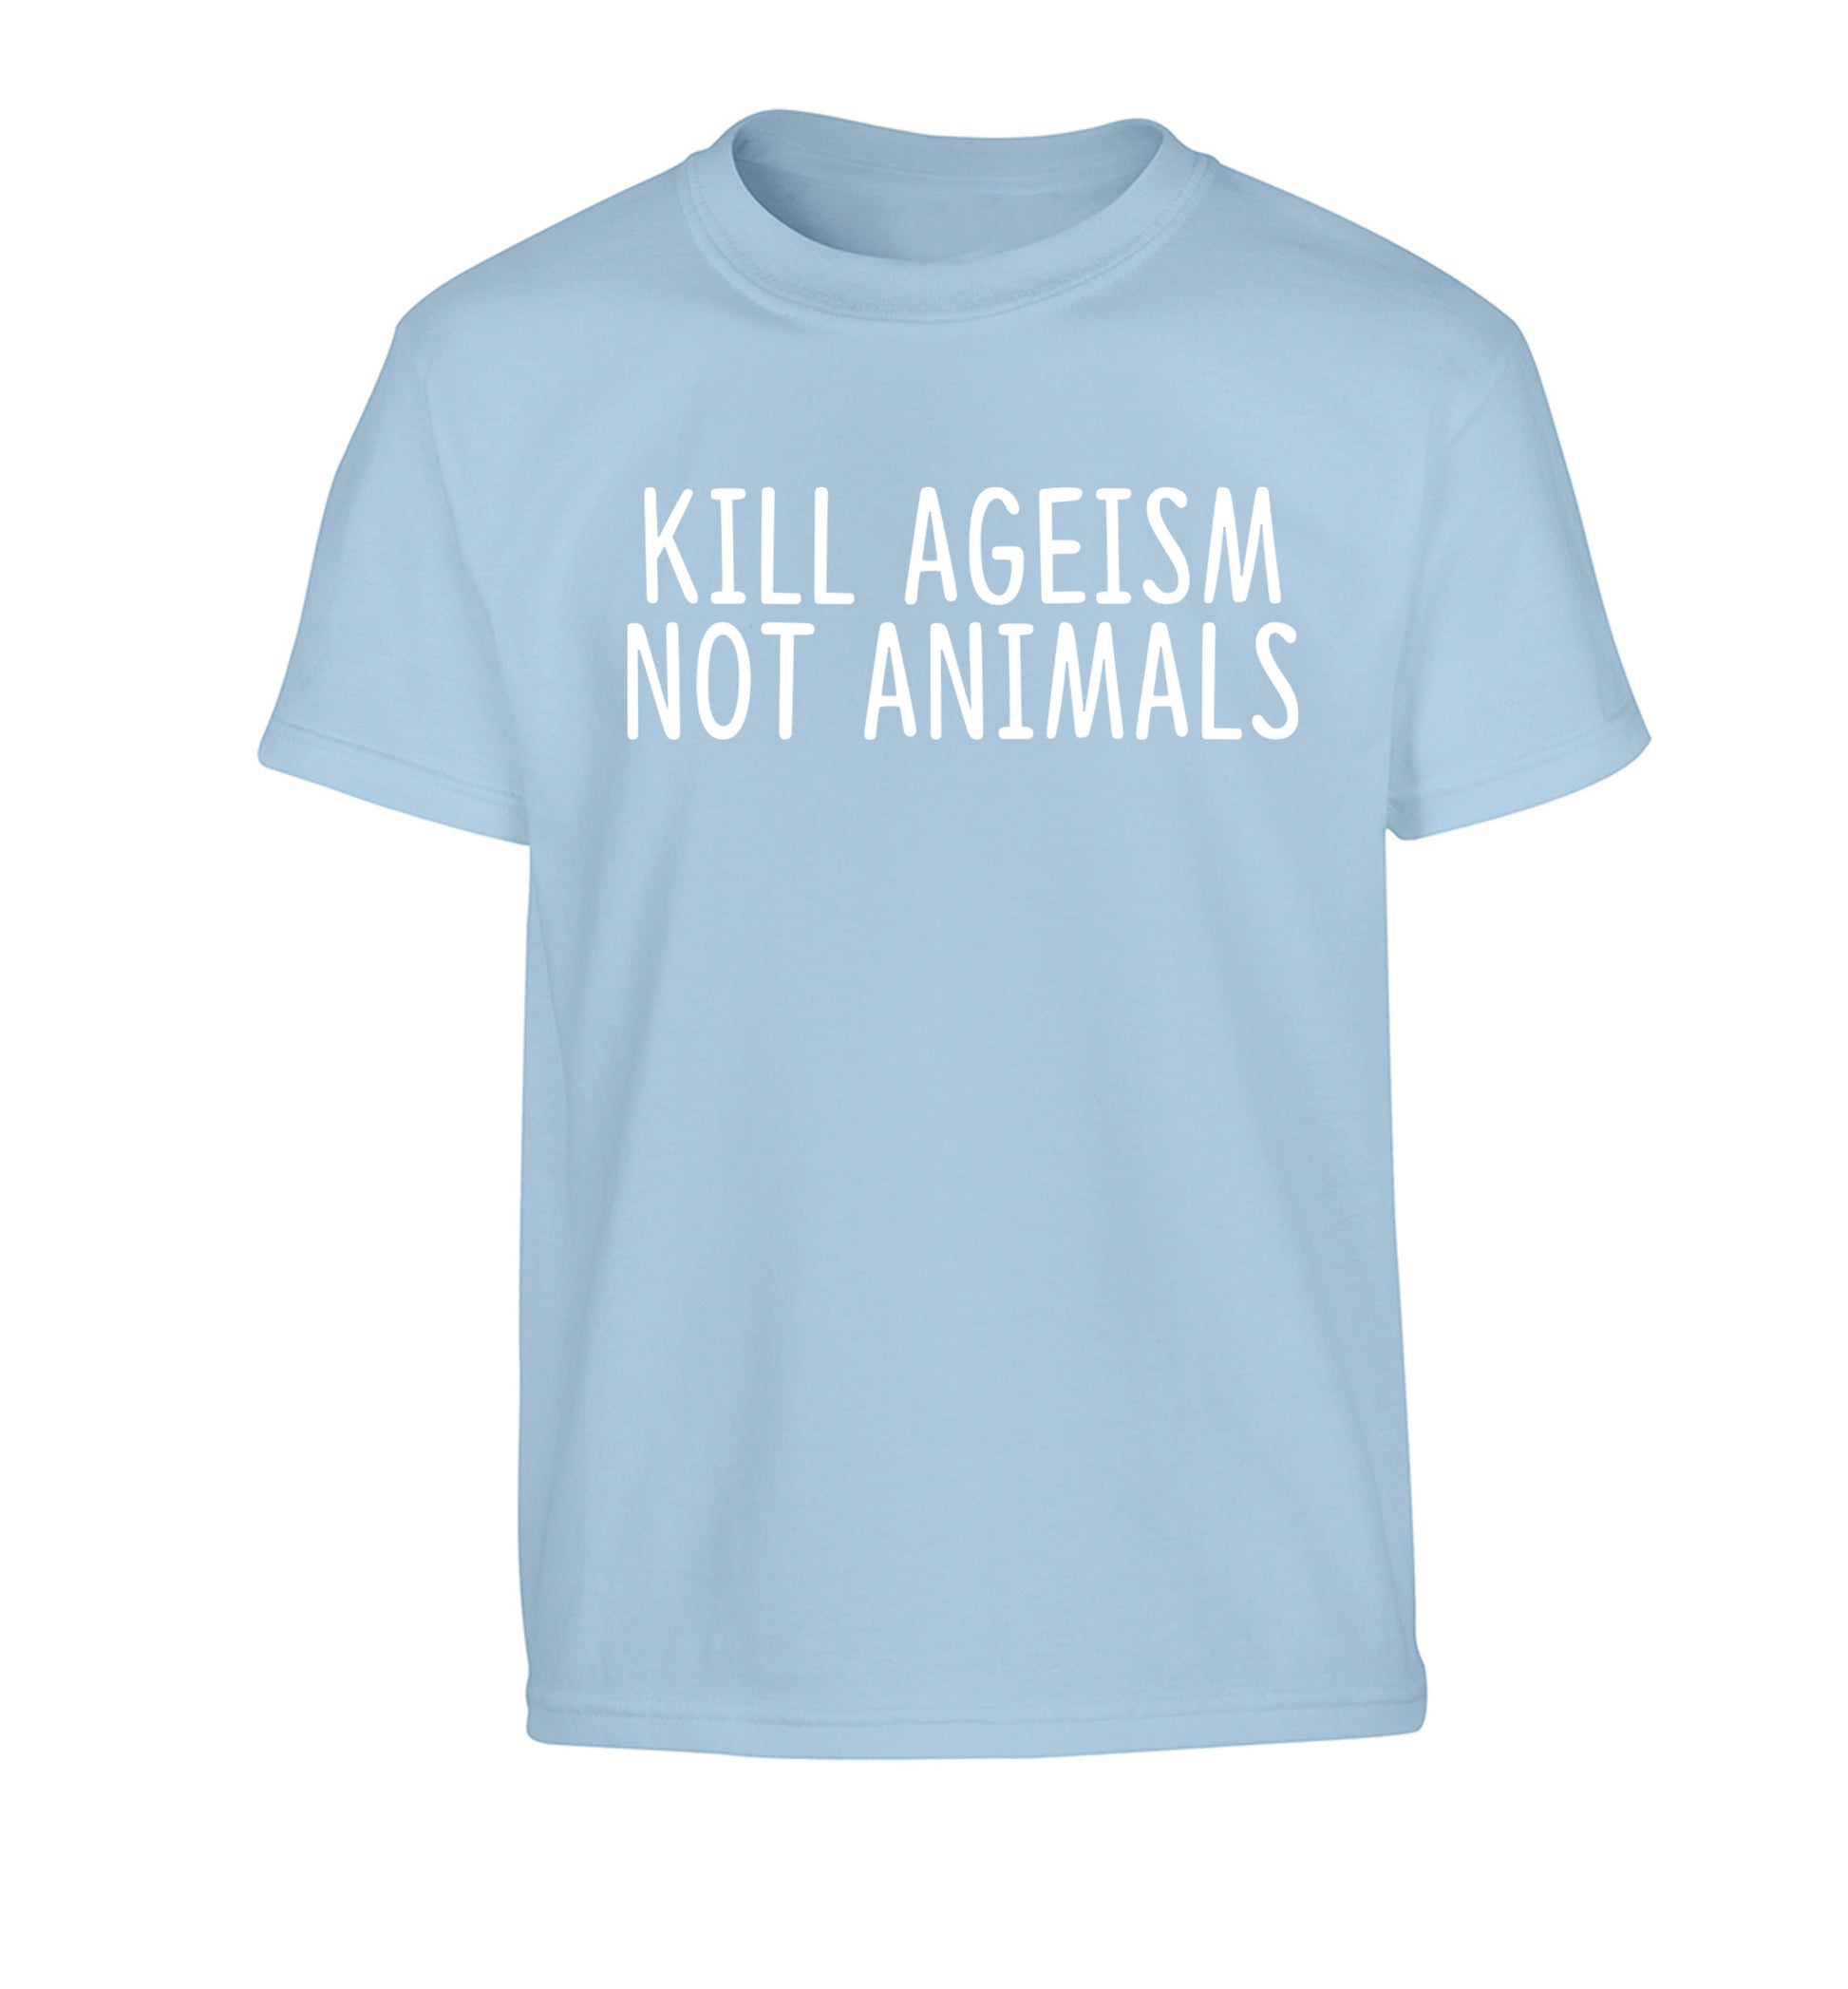 Kill Ageism Not Animals Children's light blue Tshirt 12-13 Years